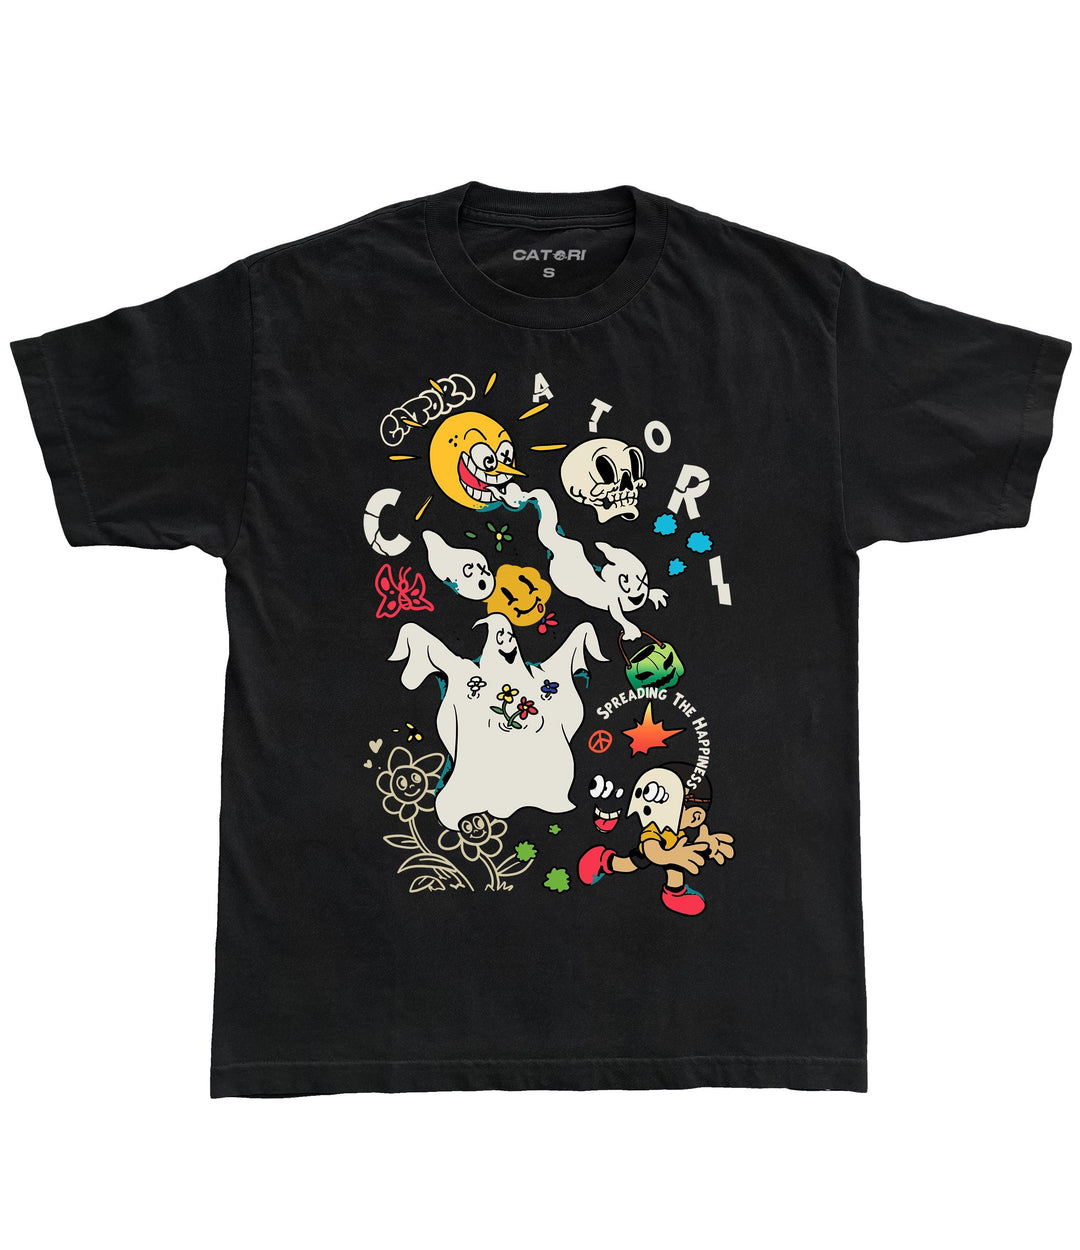 Happiness T-Shirt at Catori Clothing | Graphic & Anime Tees, Hoodies & Sweatshirts 